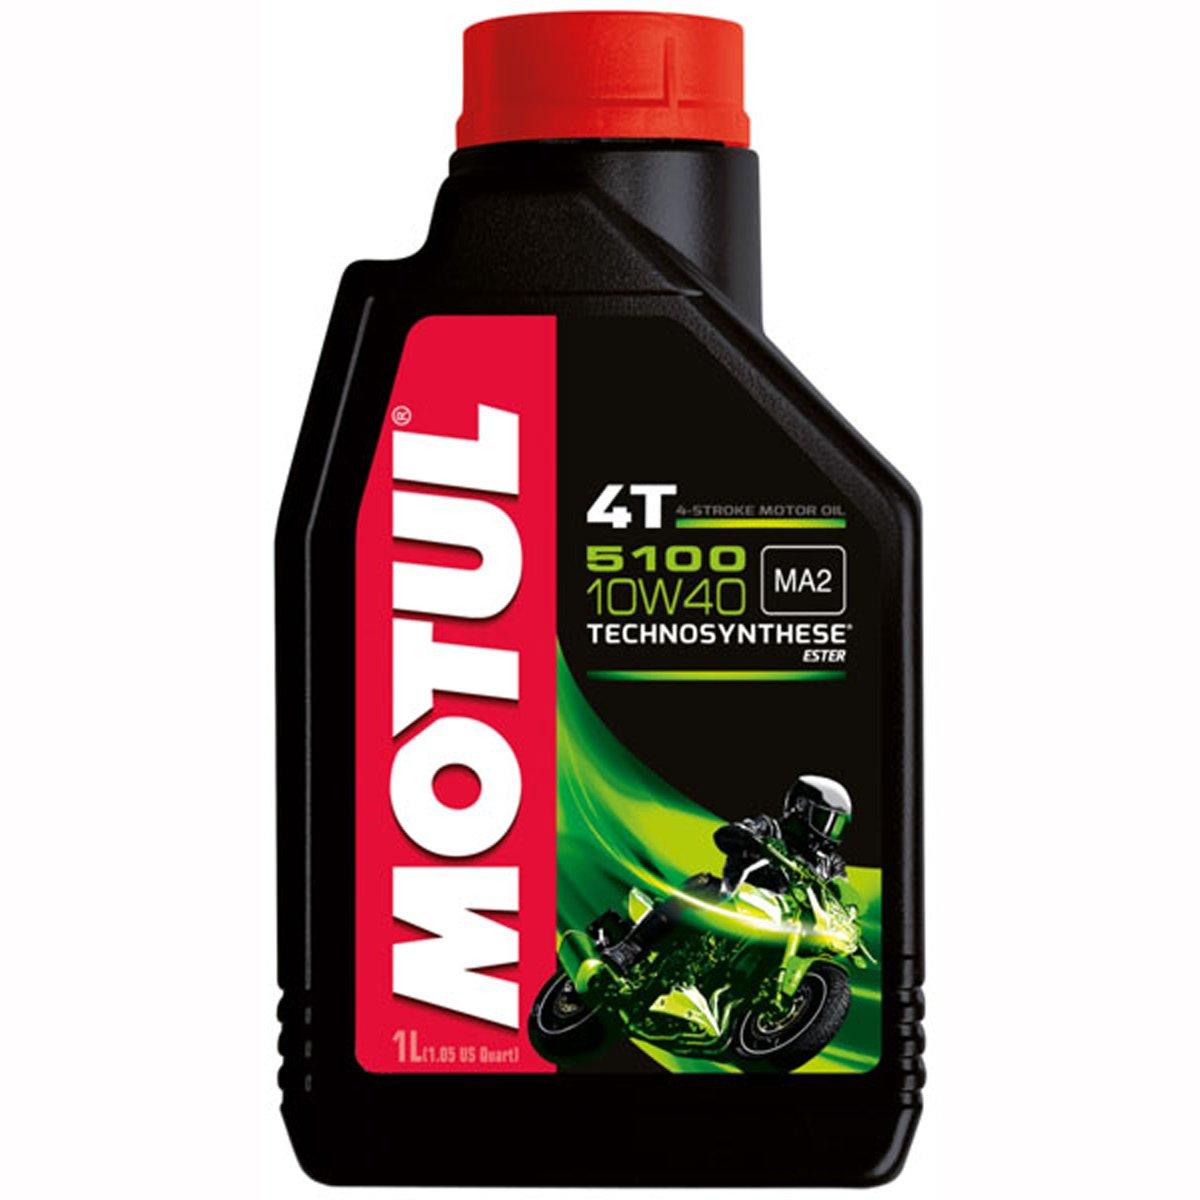 Motul Semi-Synthetic 5100 10W40 4T Oil - Black - Browse our range of Care: Oils & Liquids - 1 Litre